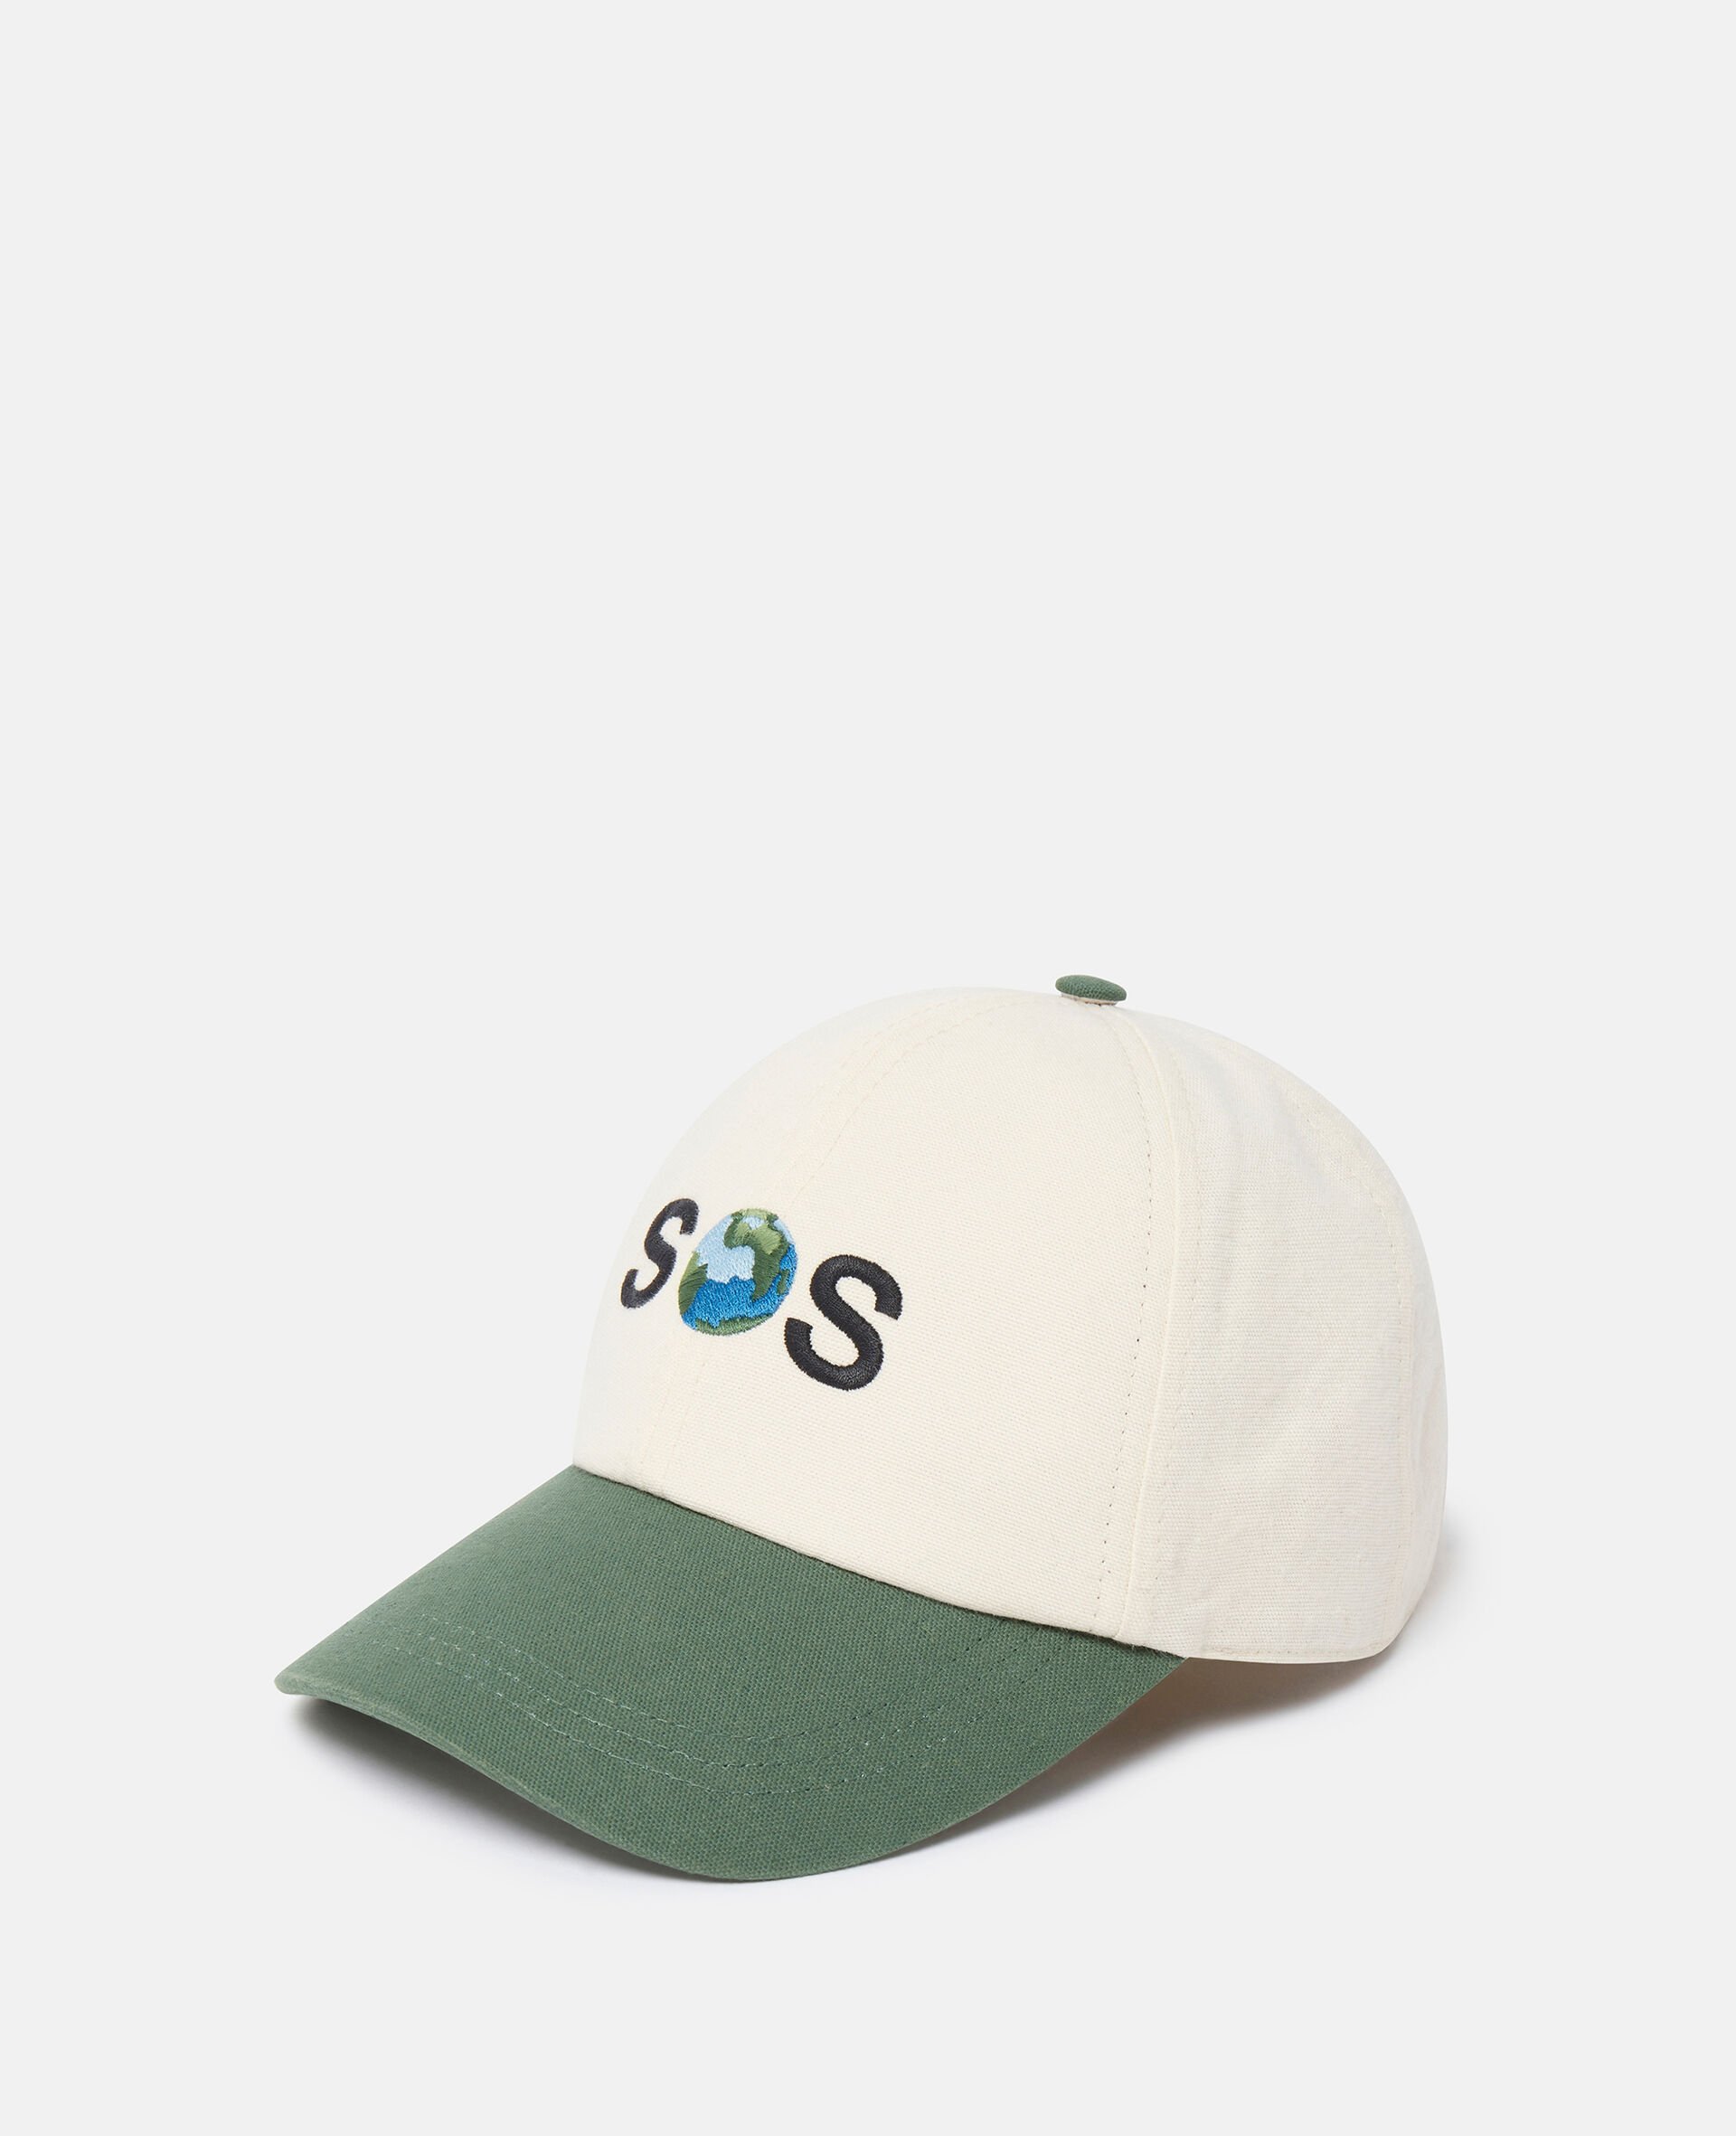 SOS Embroidered Baseball Cap-Beige-large image number 0